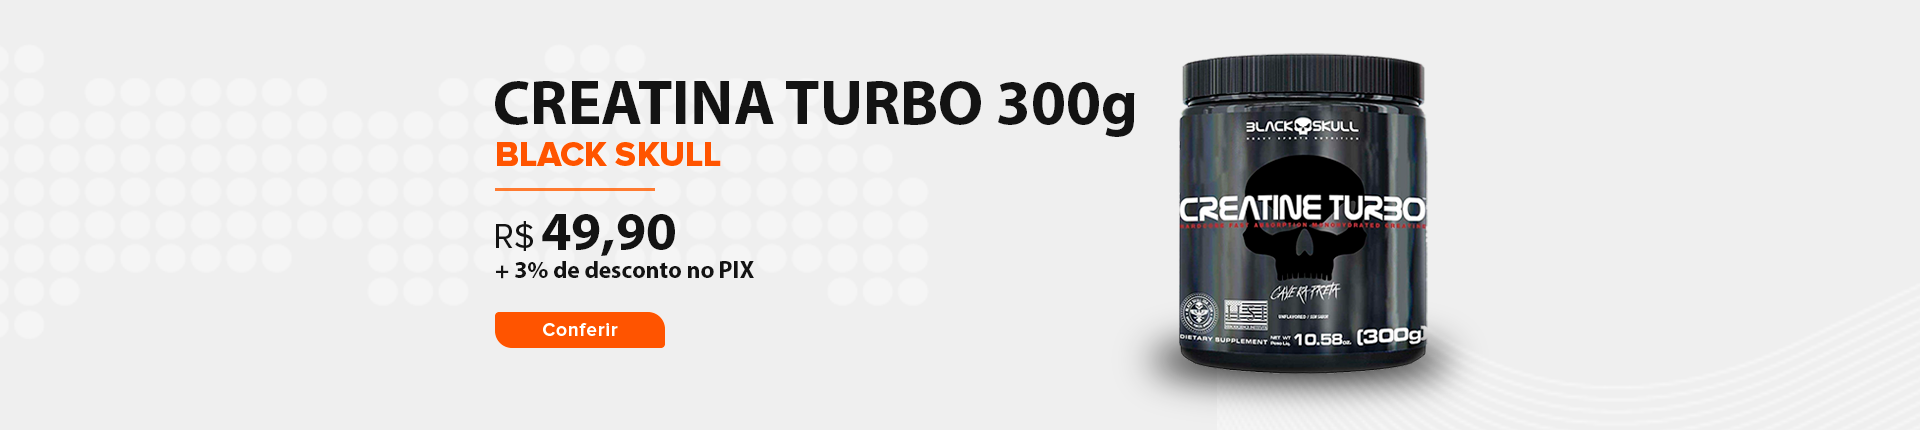 Creatina Turbo 300g